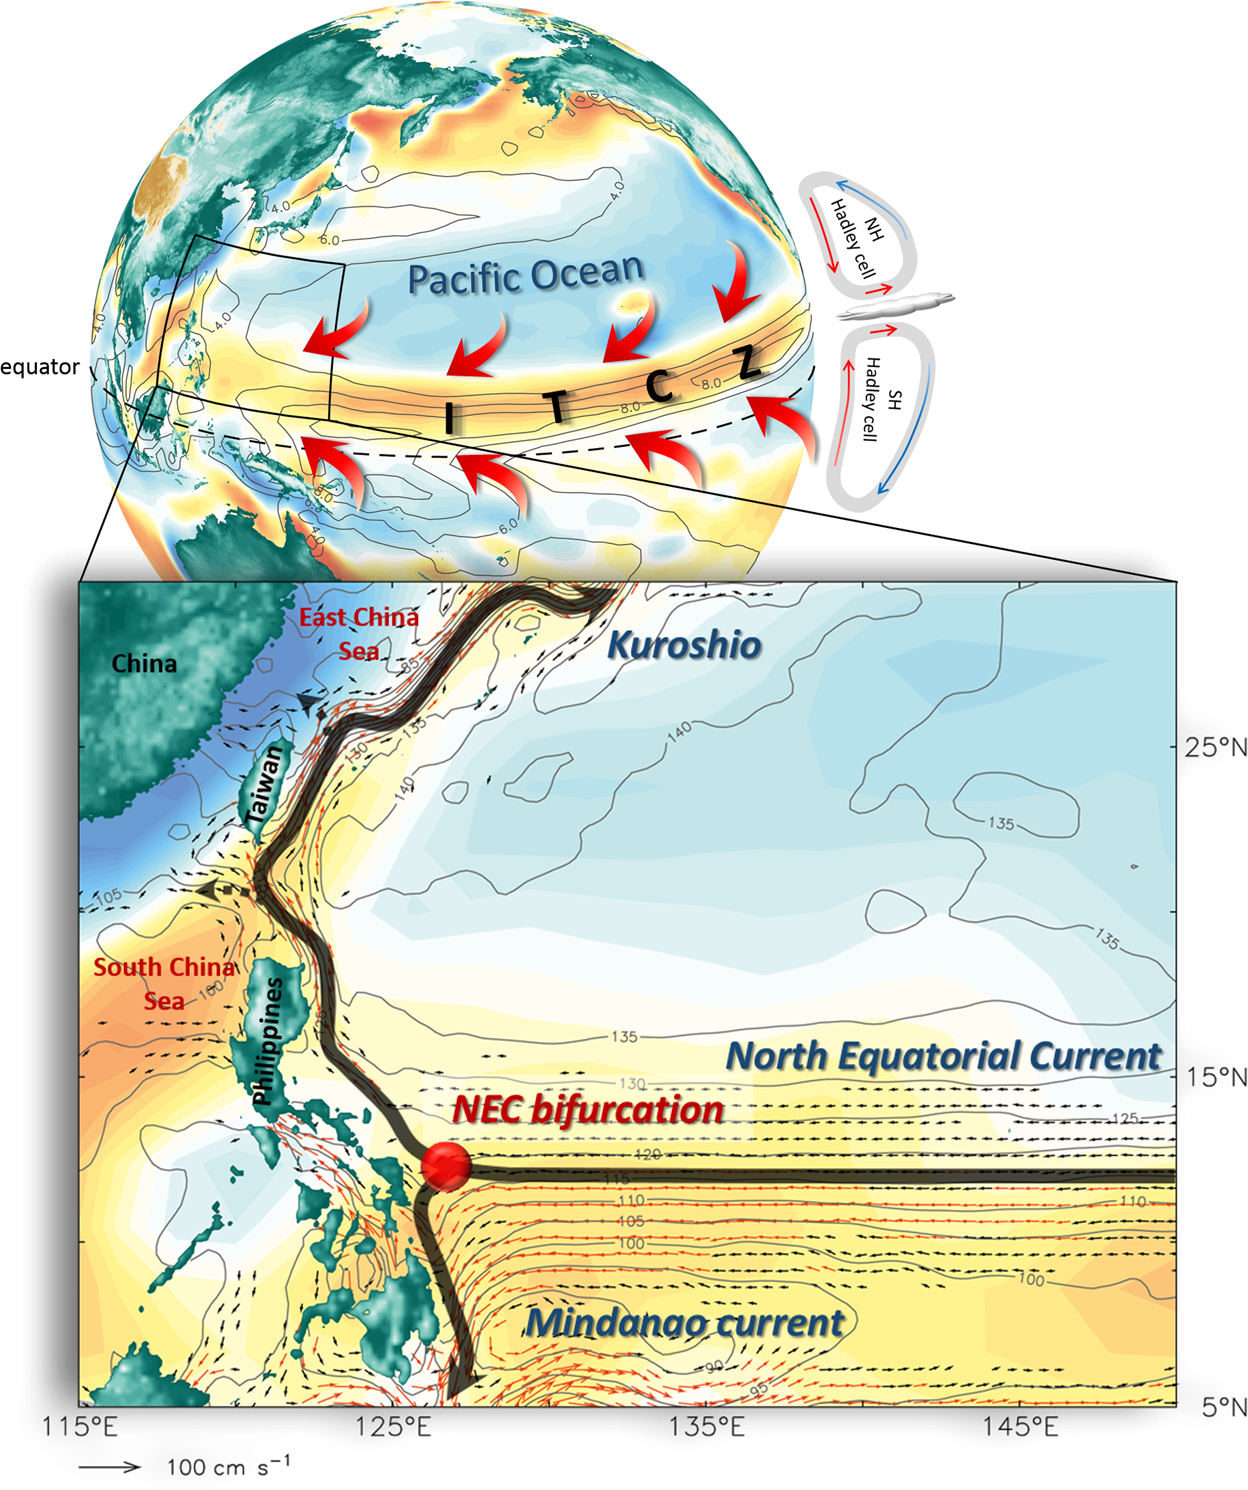 ACP - Atlantic Multidecadal Oscillation modulates the relationship